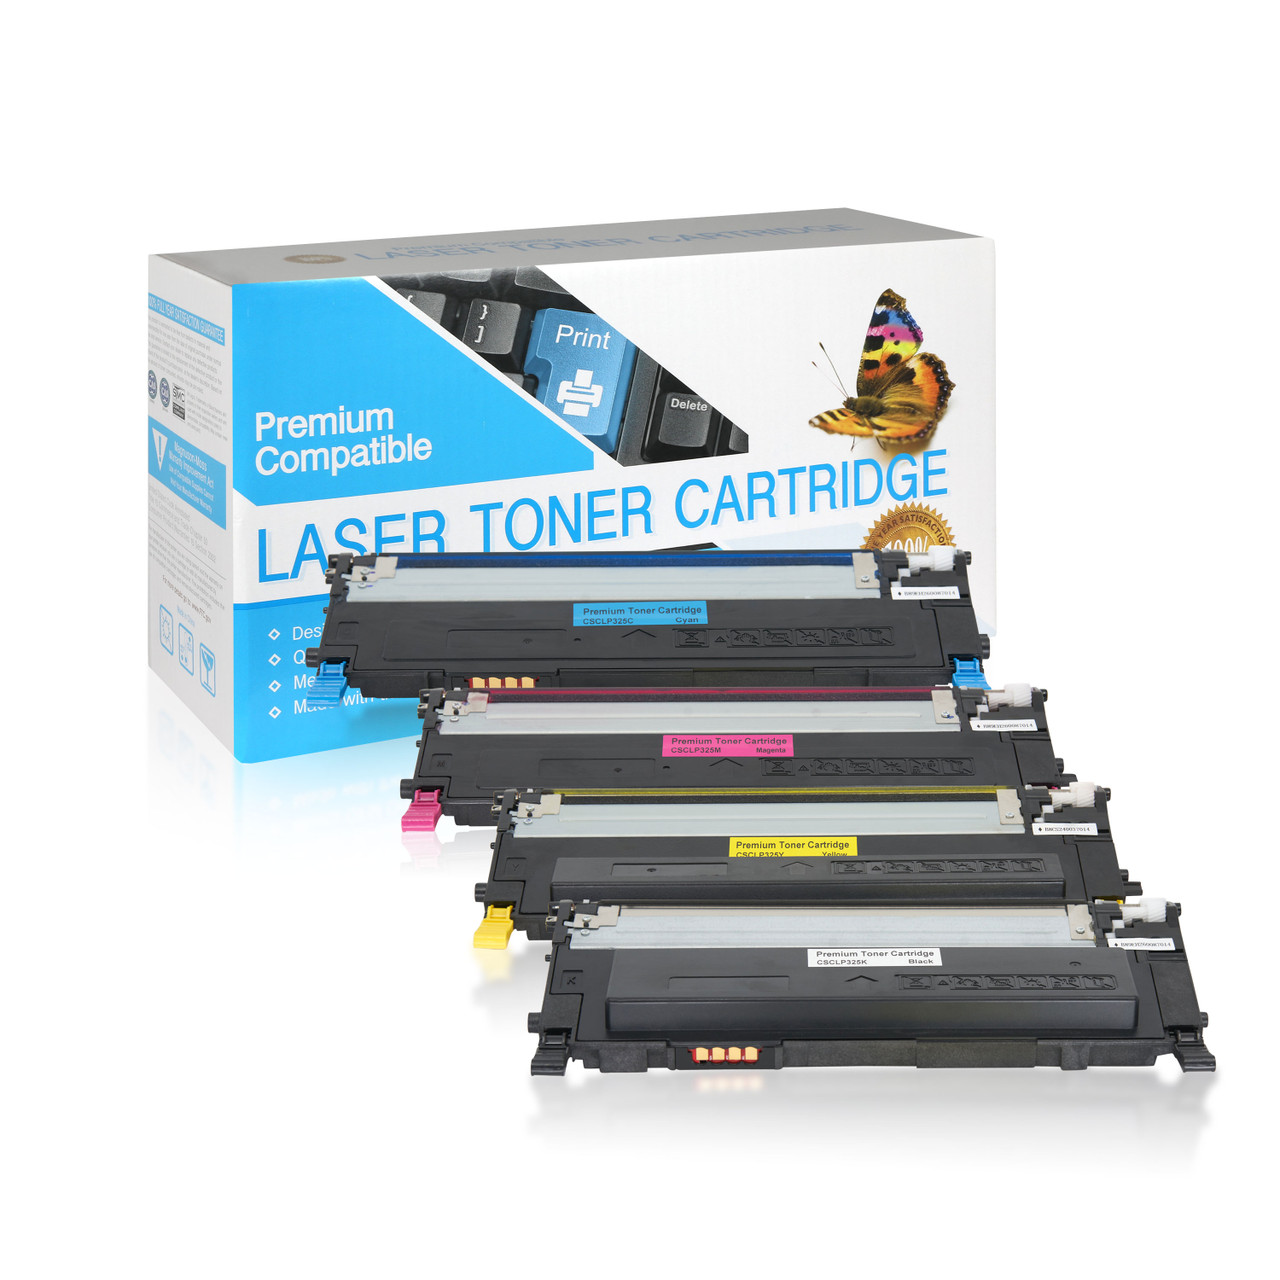 Samsung CLP-321 Color Laser Printer series